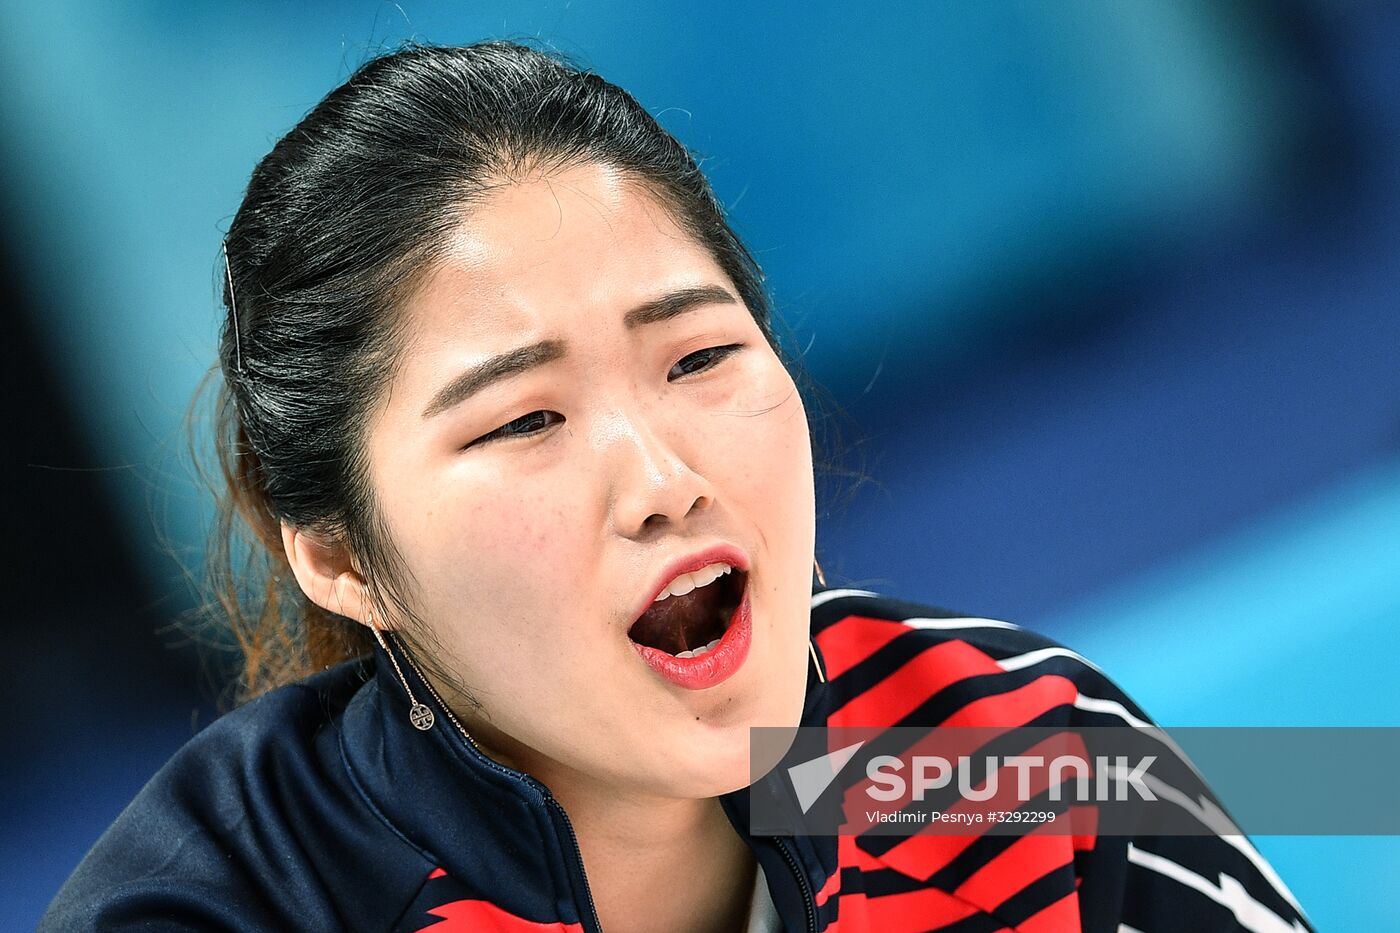 2018 Winter Olympics . Curling. Mixed doubles. Republic of Korea vs. OAR